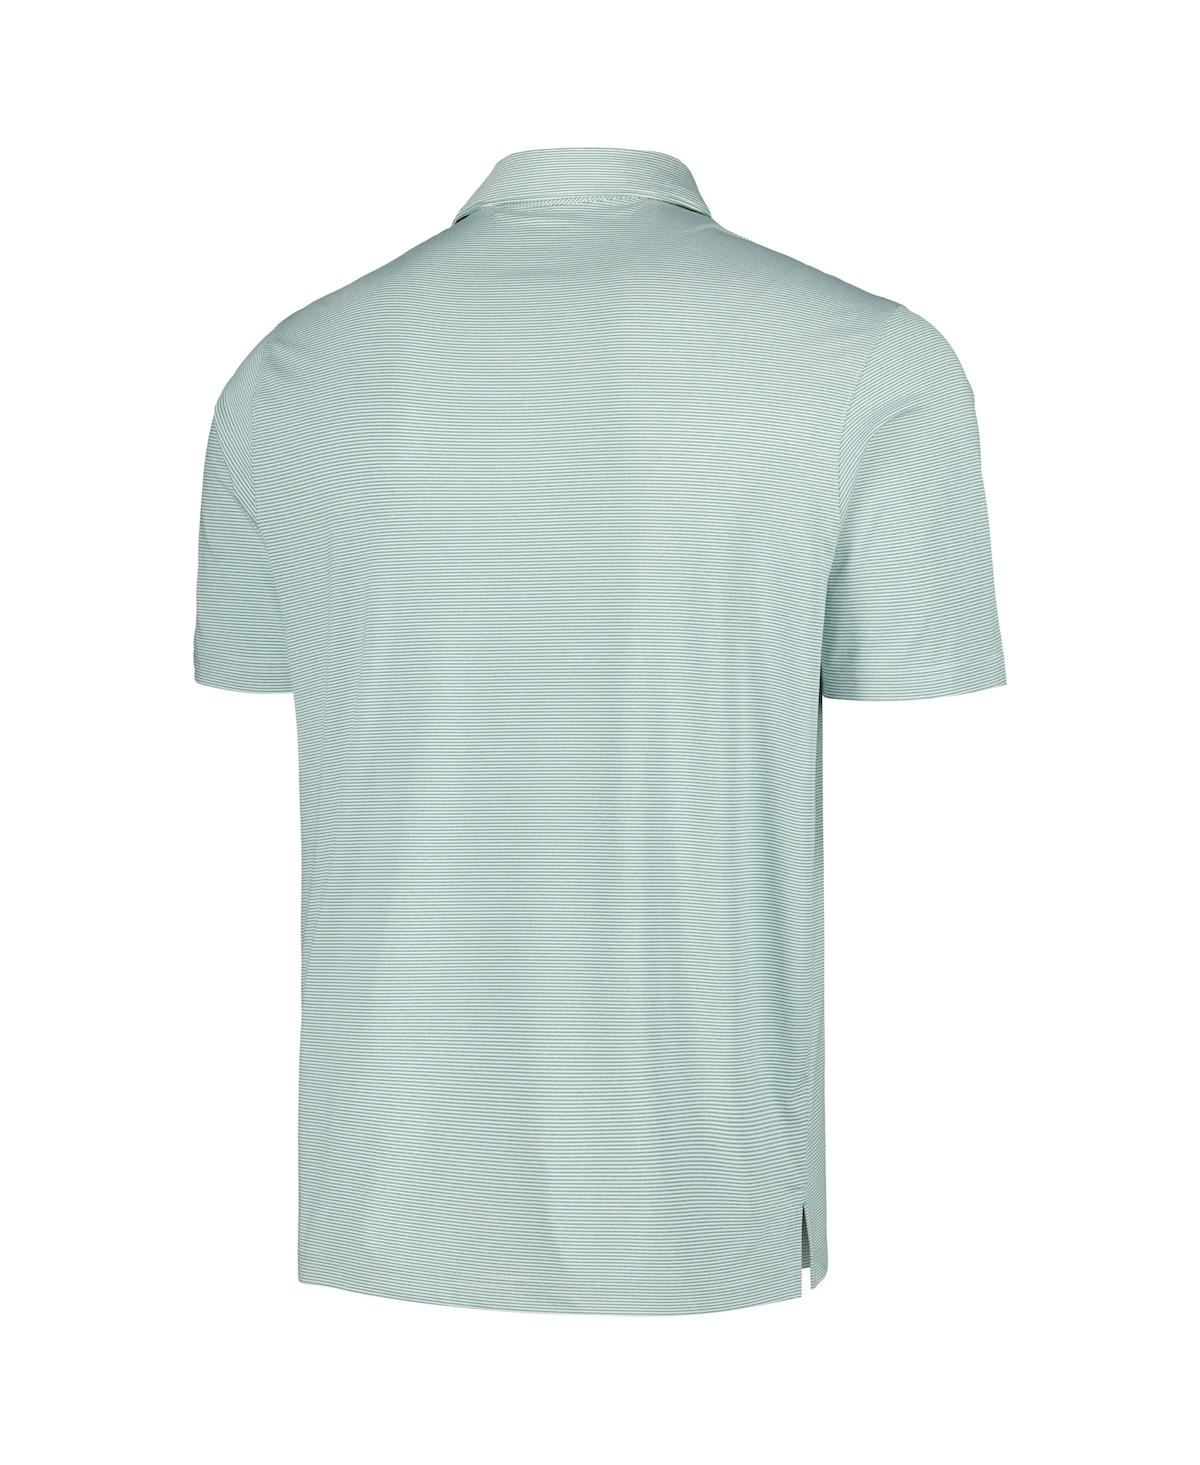 Shop Ahead Men's  Green Wgc-dell Technologies Match Play Airstream Essential Feed Striped Polo Shirt